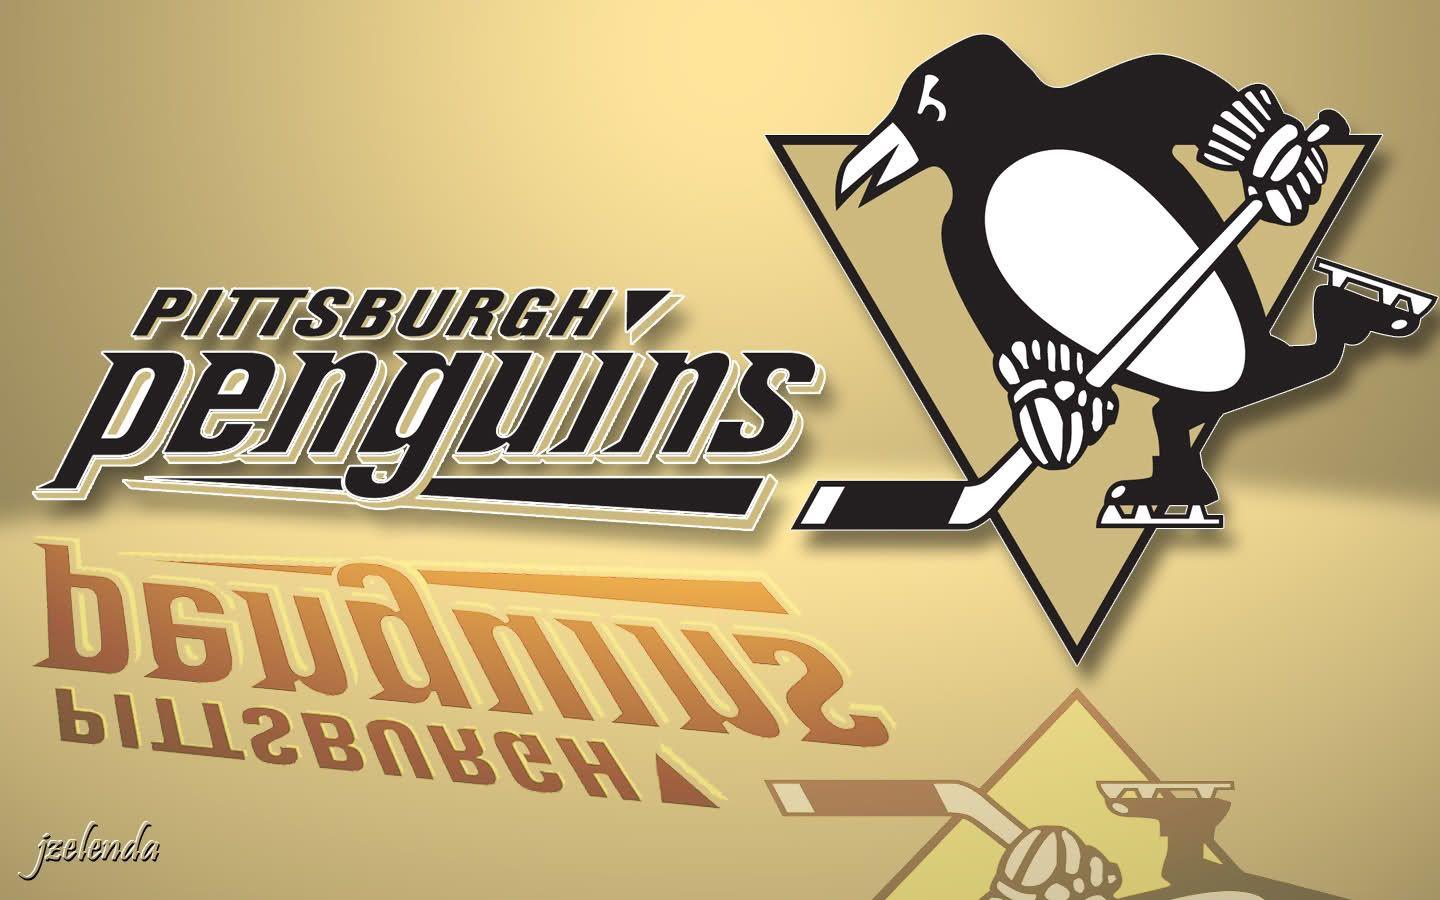 Pittsburgh Penguins 2018 Wallpapers - Wallpaper Cave